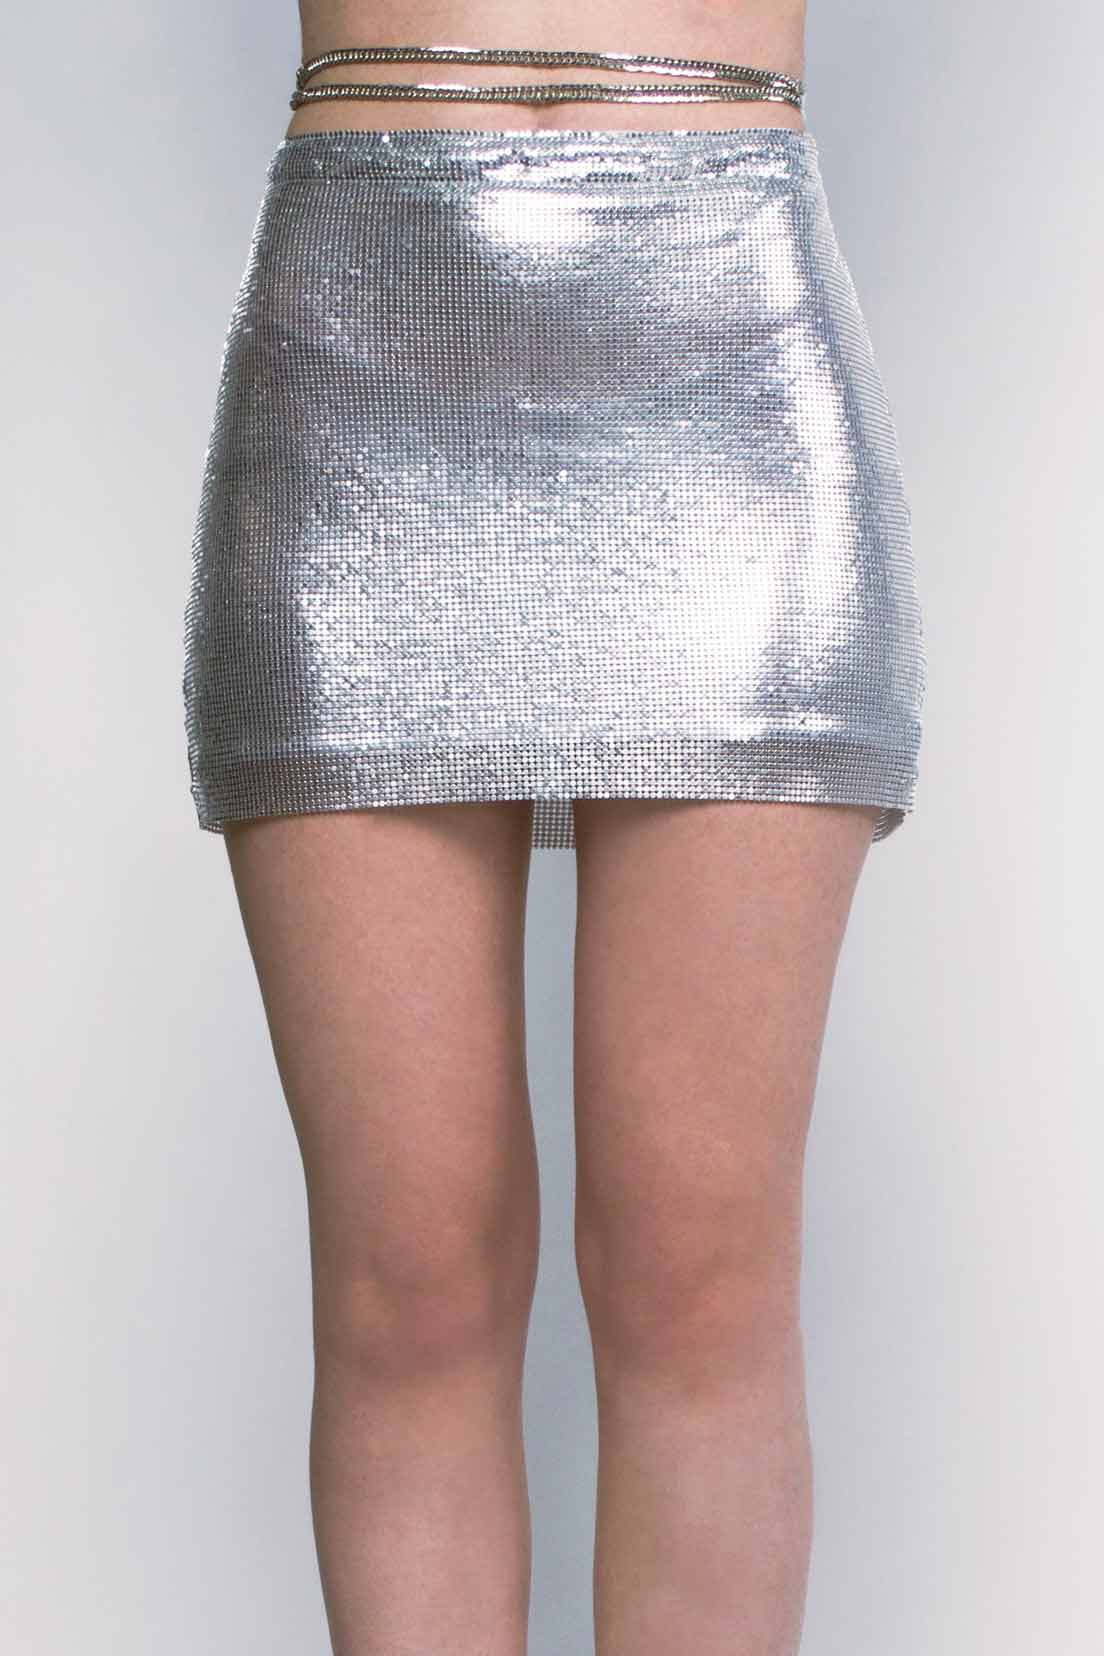 Interstellar Metallic Skirt - Silver